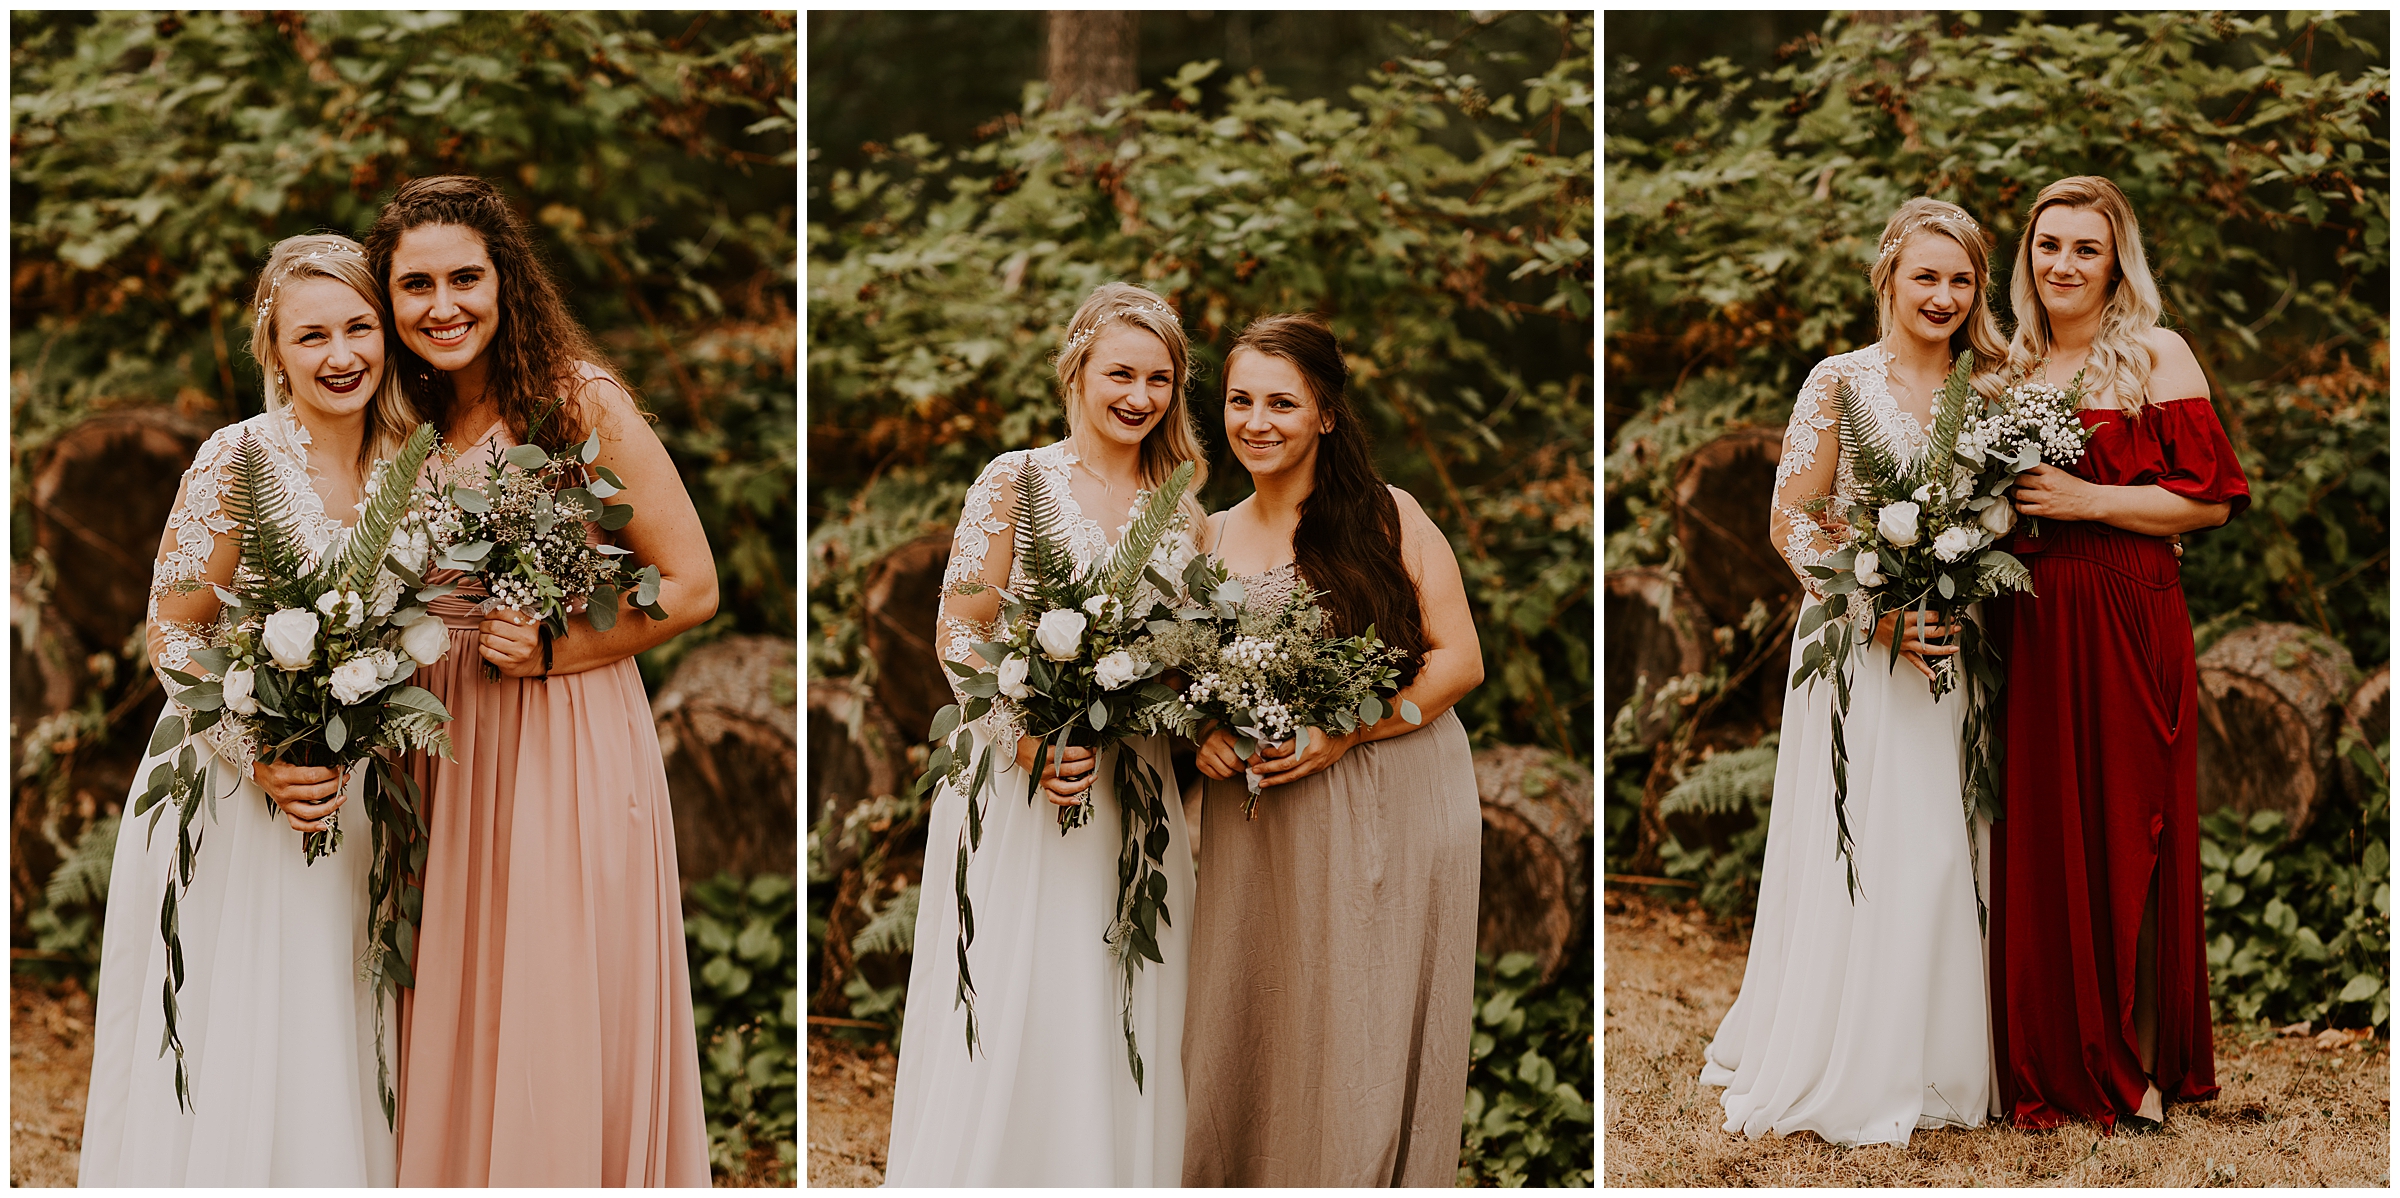 Cameo + Dawson's romantic backyard wedding in Olalla, WA by Seattle Wedding Photographer, Kamra Fuller Photography